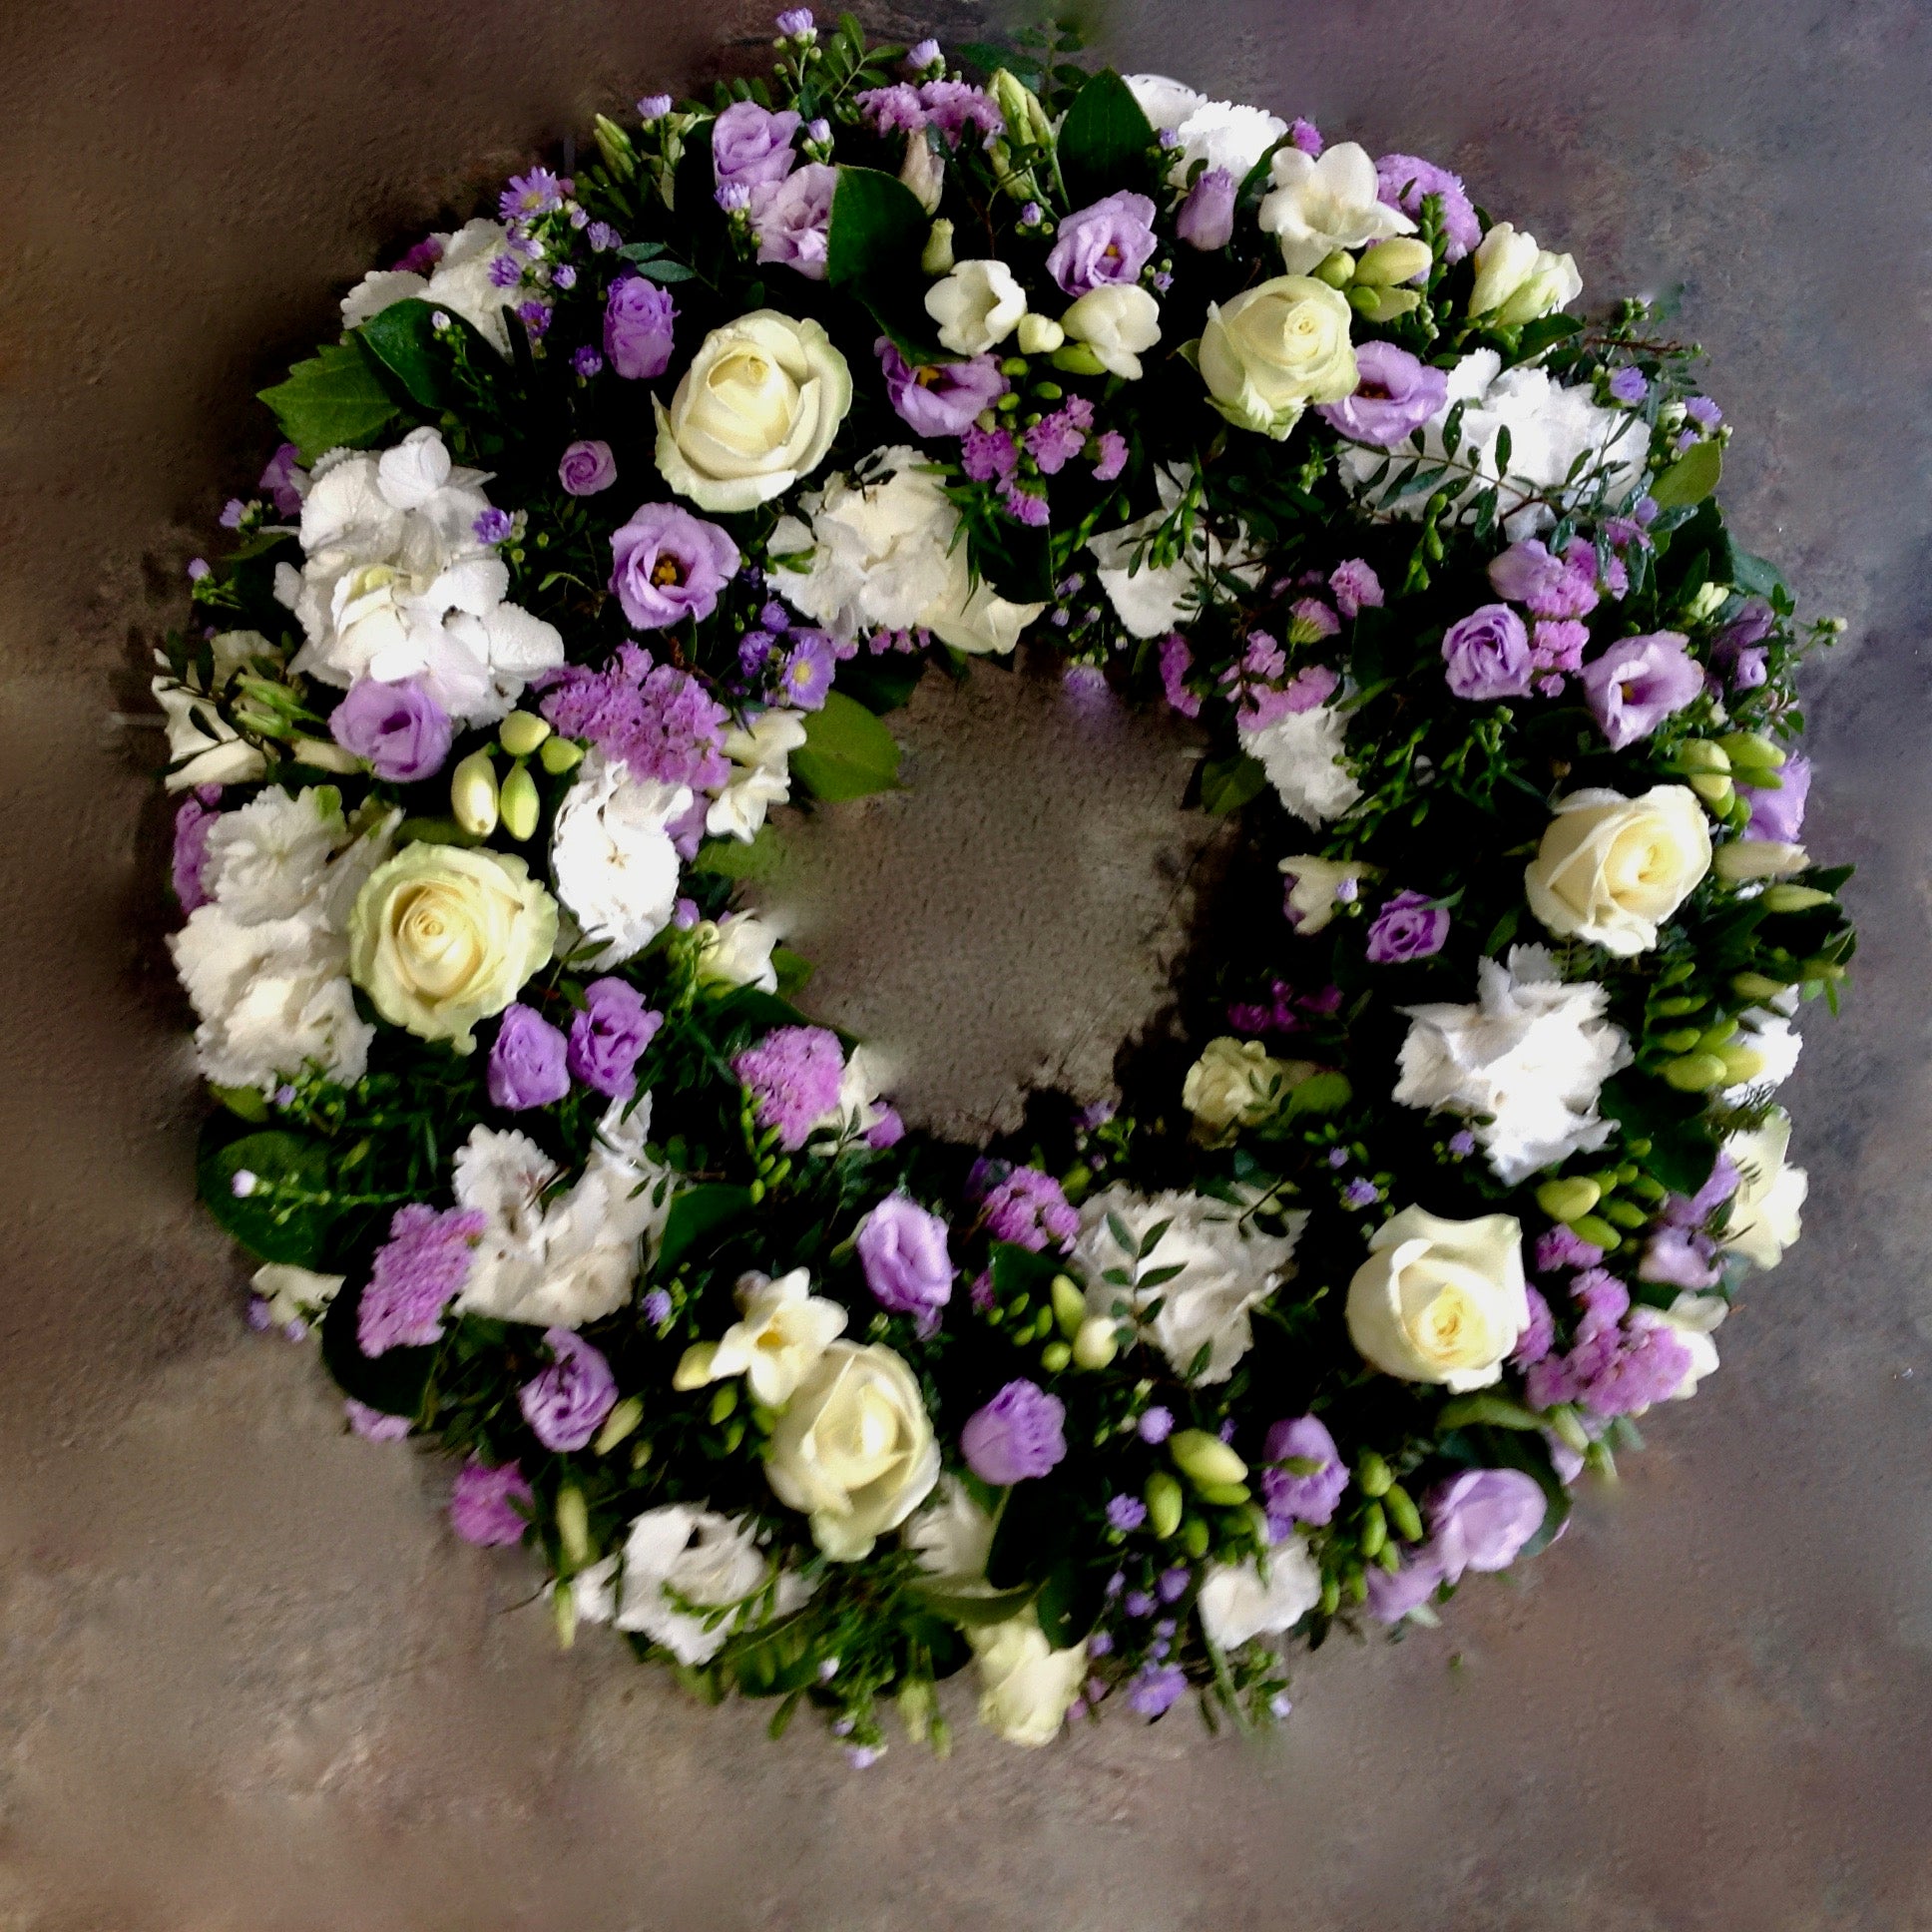 Lilac freesia. cream roses, lilac lisianthus together create a funeral wreath. 